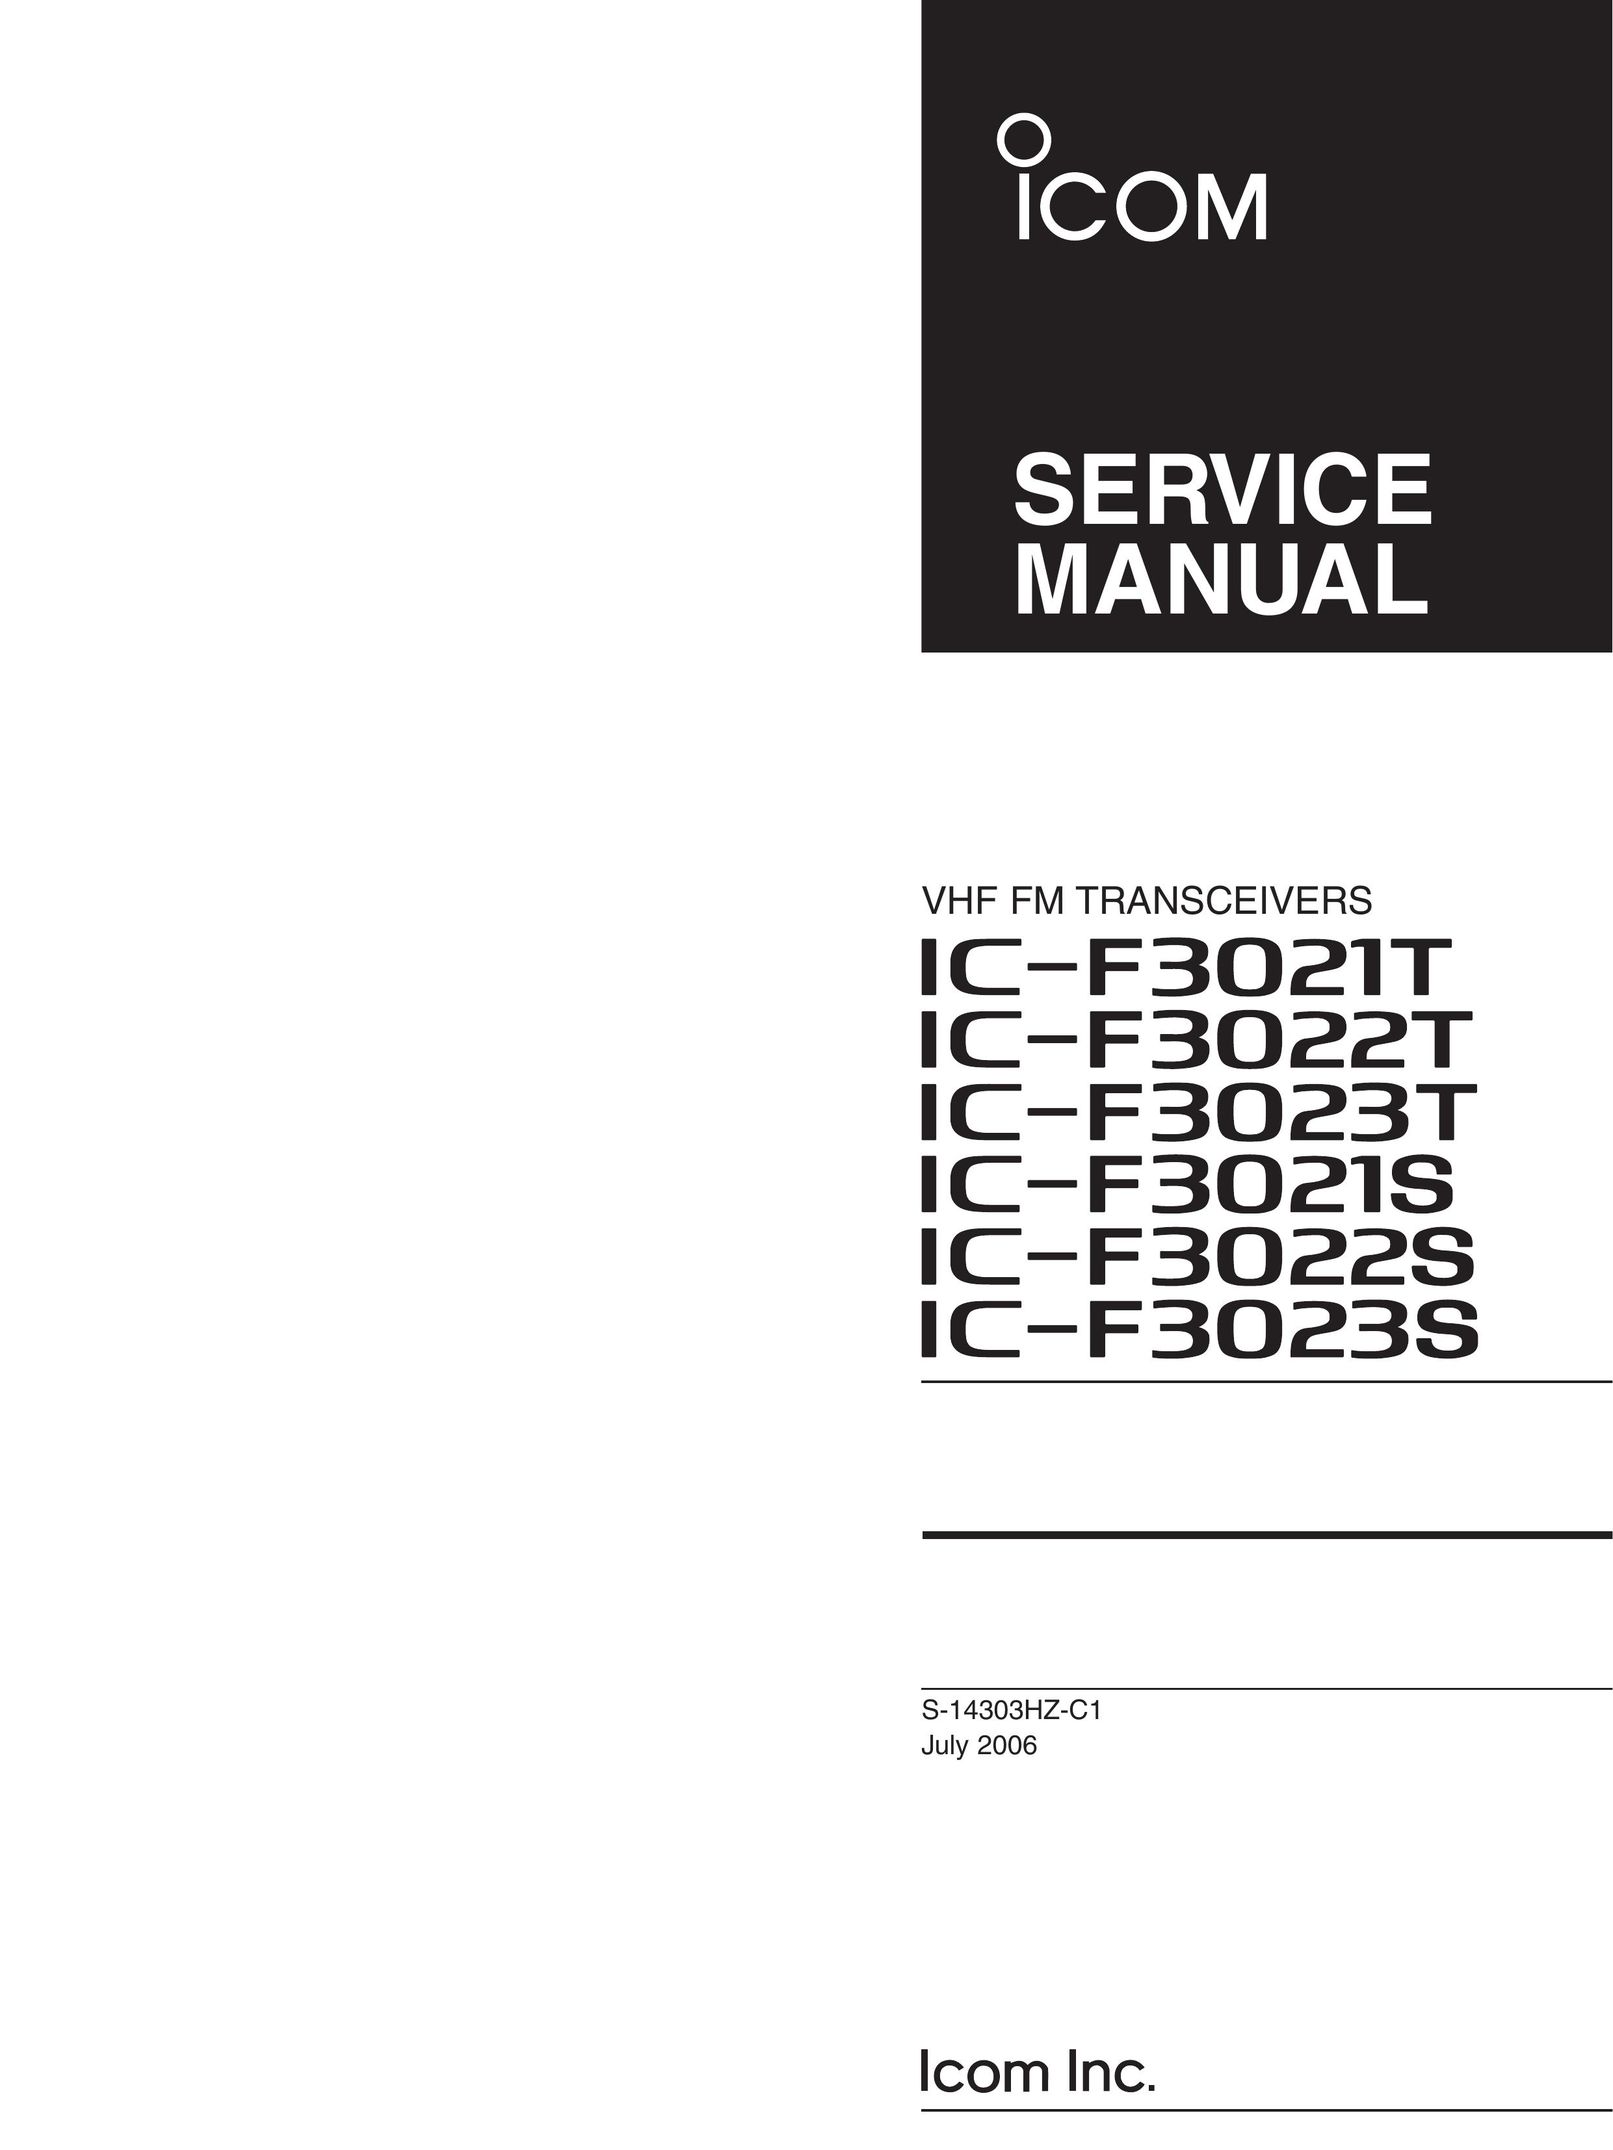 Icom IC-F3023S Two-Way Radio User Manual